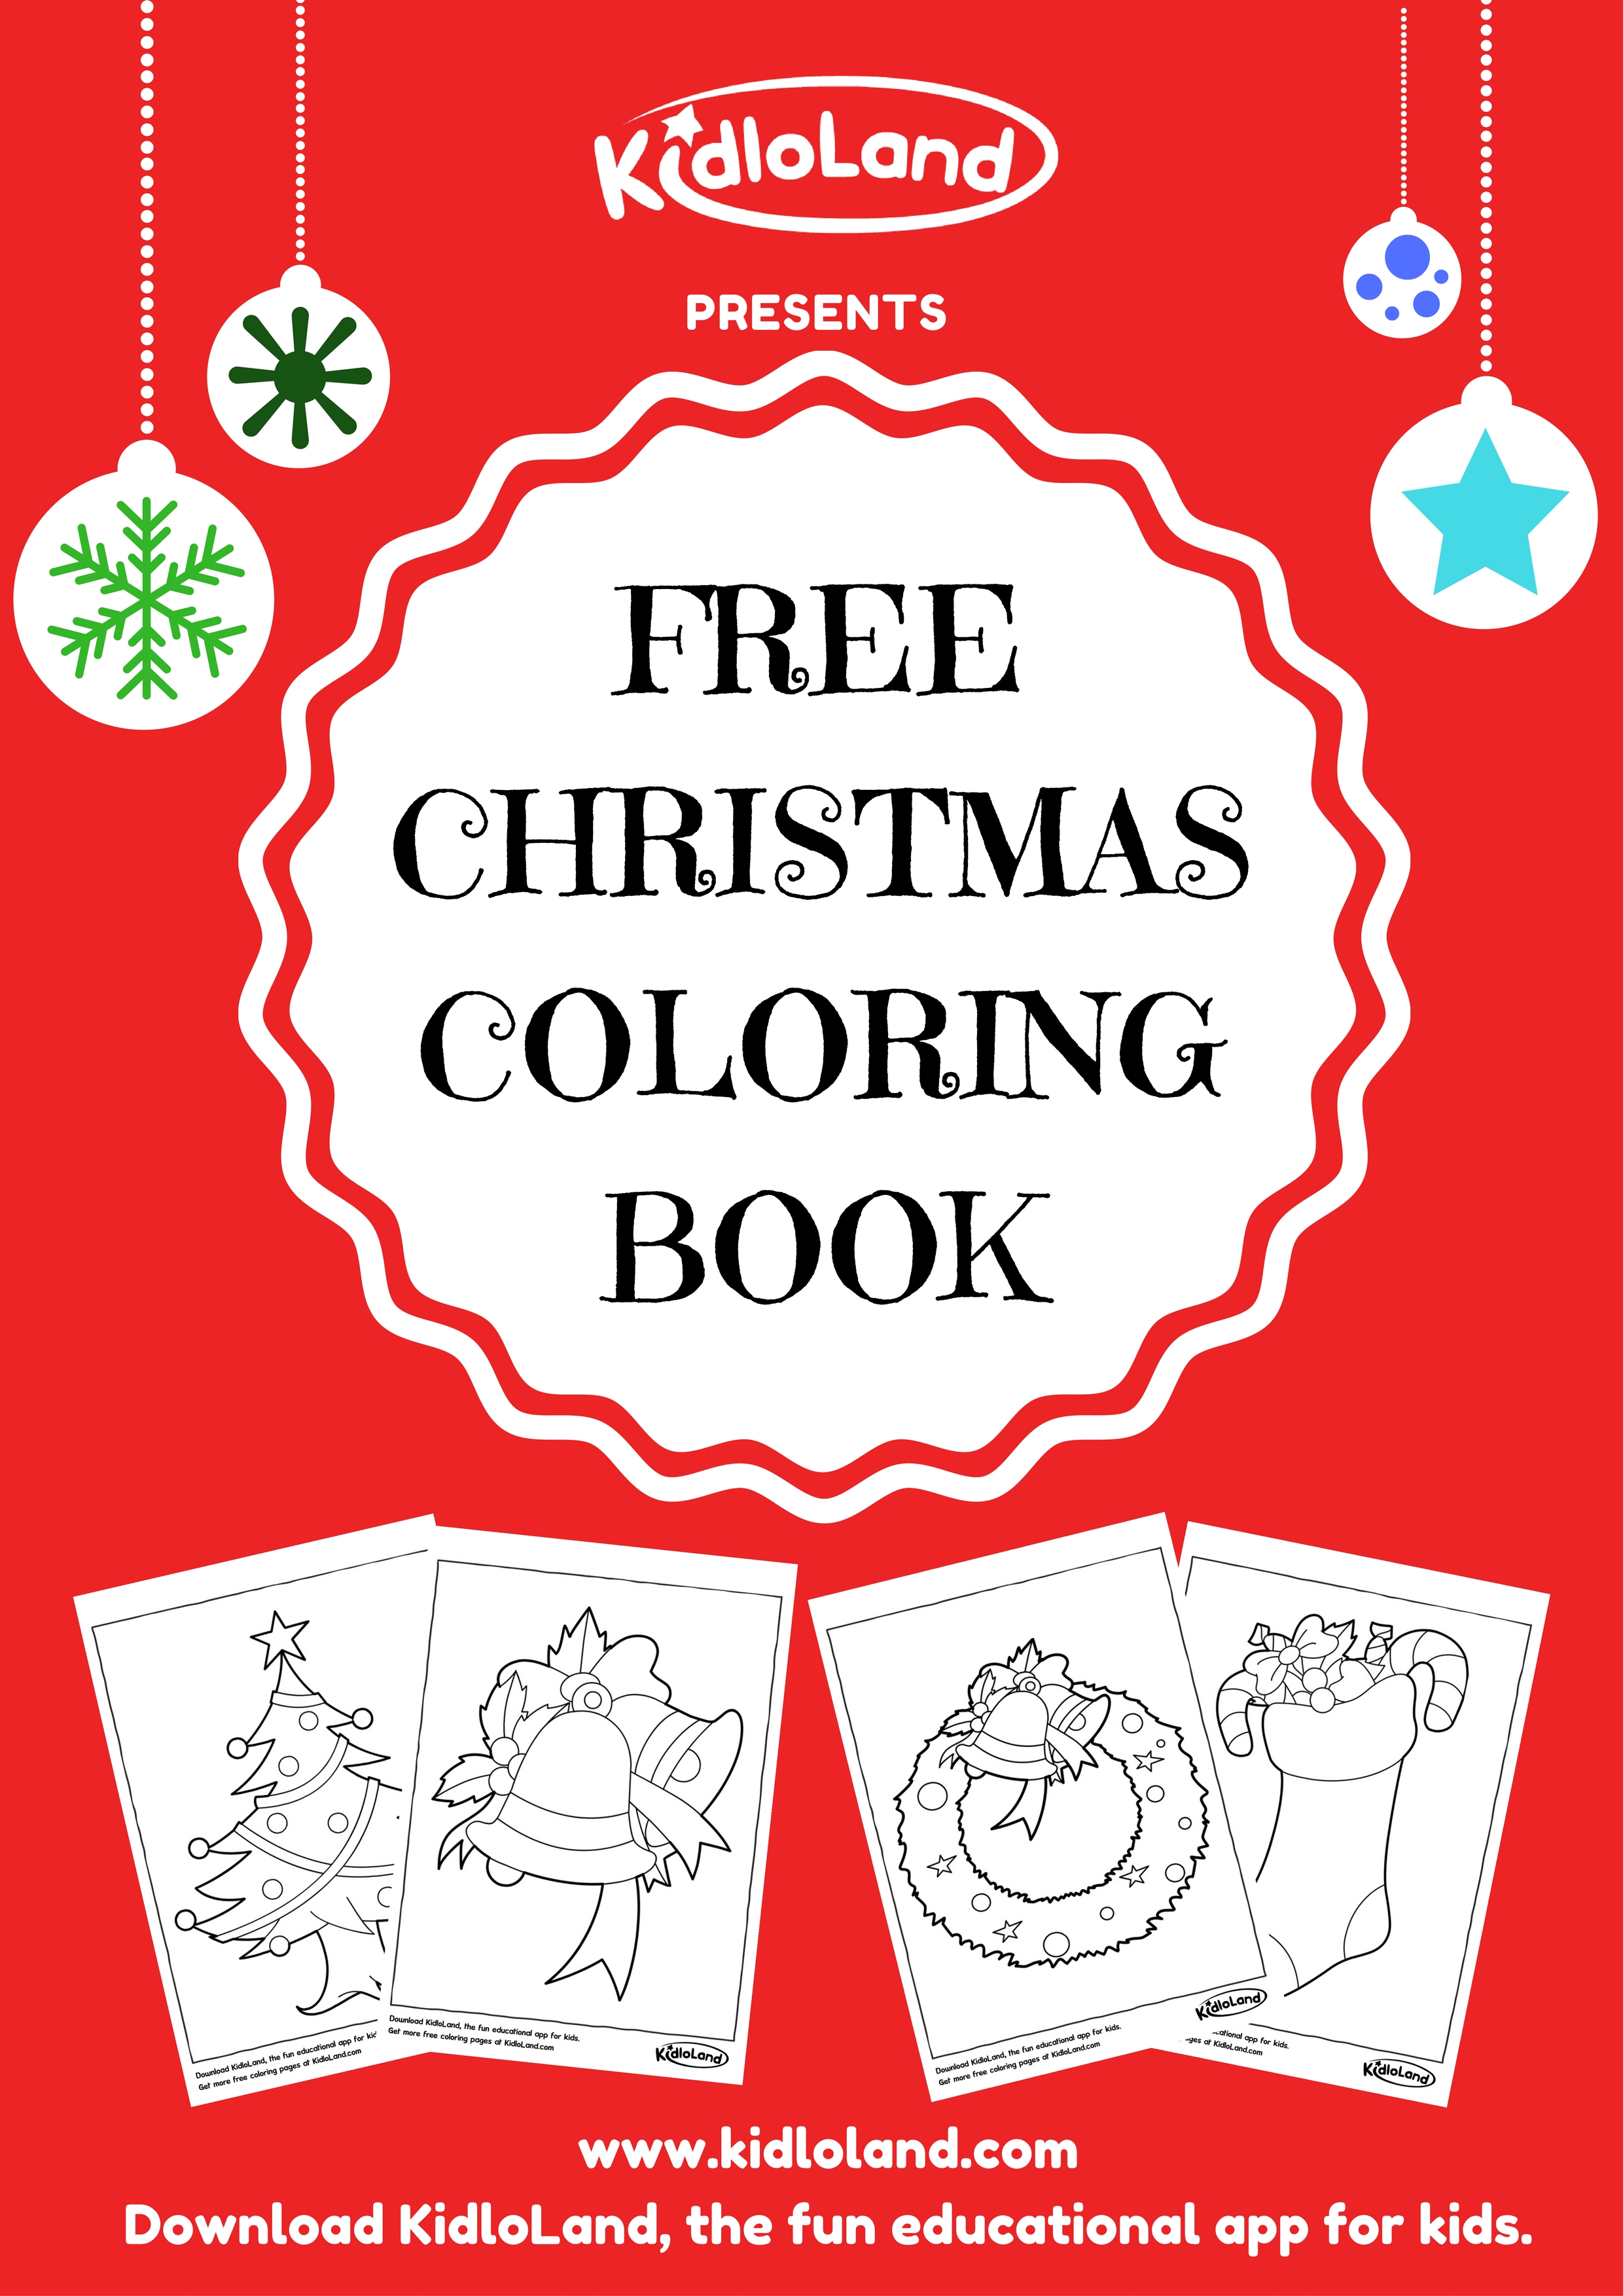 FREE CHRISTMAS COLORING BOOK - KidloLand